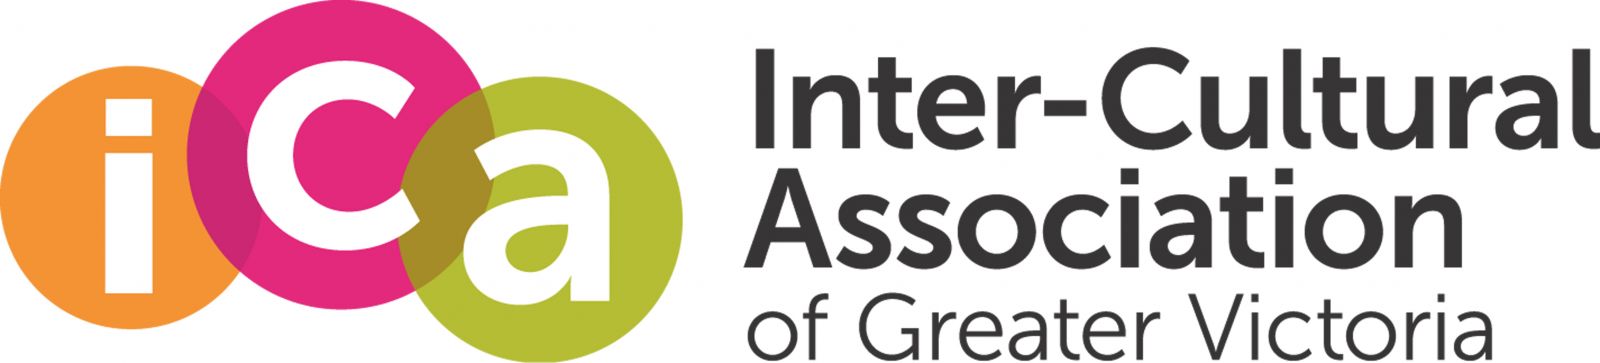 ICA logo - colour - horizontal(1).jpg